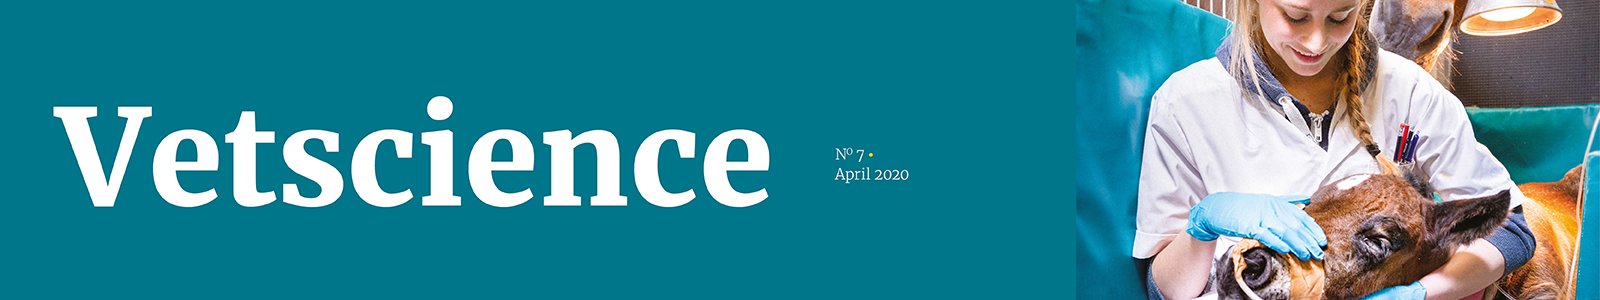 Vetscience nr 7, april 2020